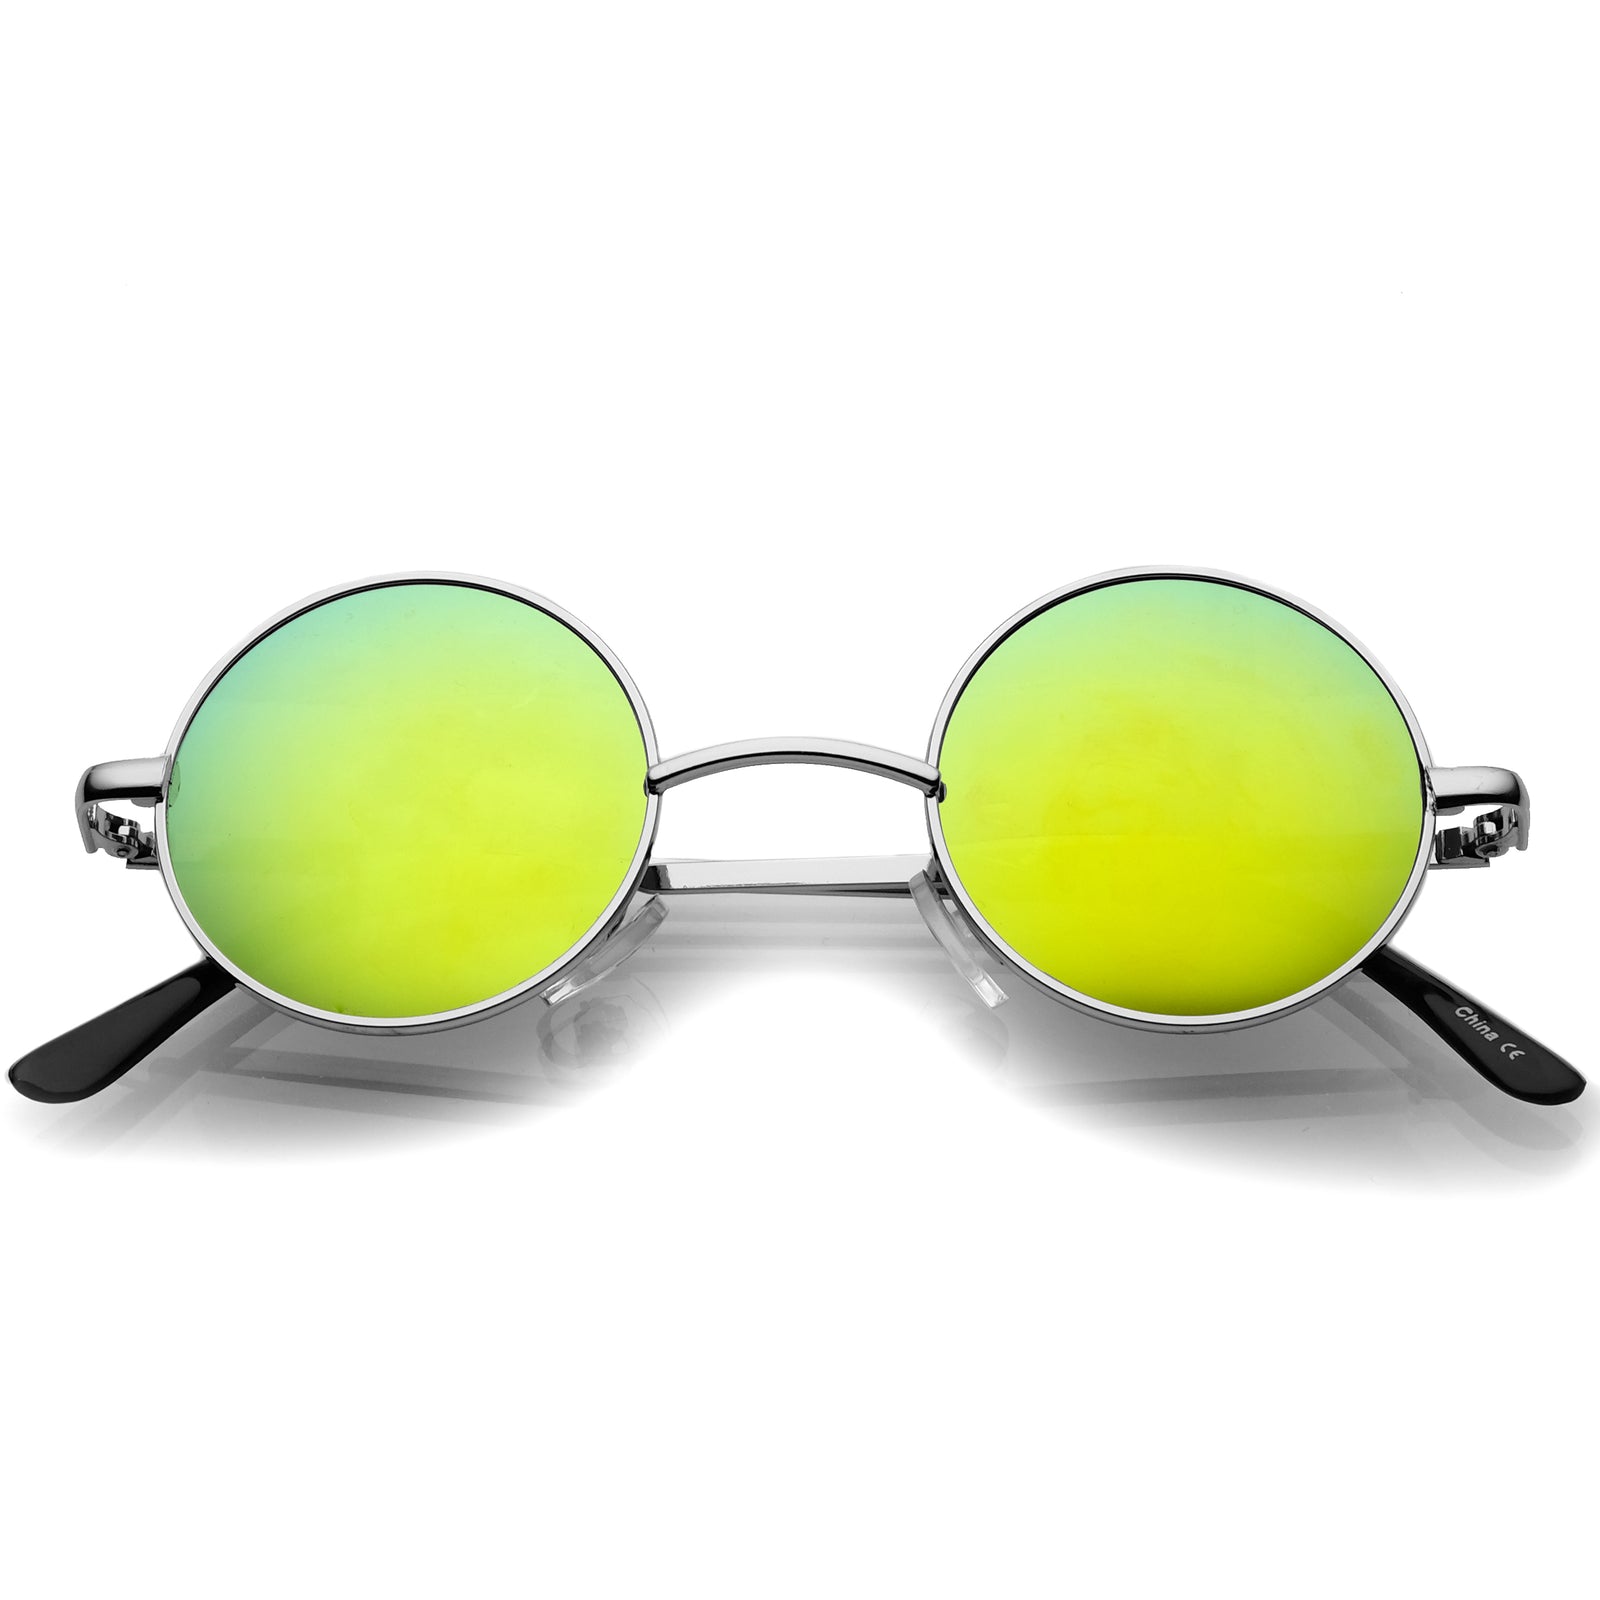 Trendy Round Fashion Sunglasses Tagged mens - zeroUV